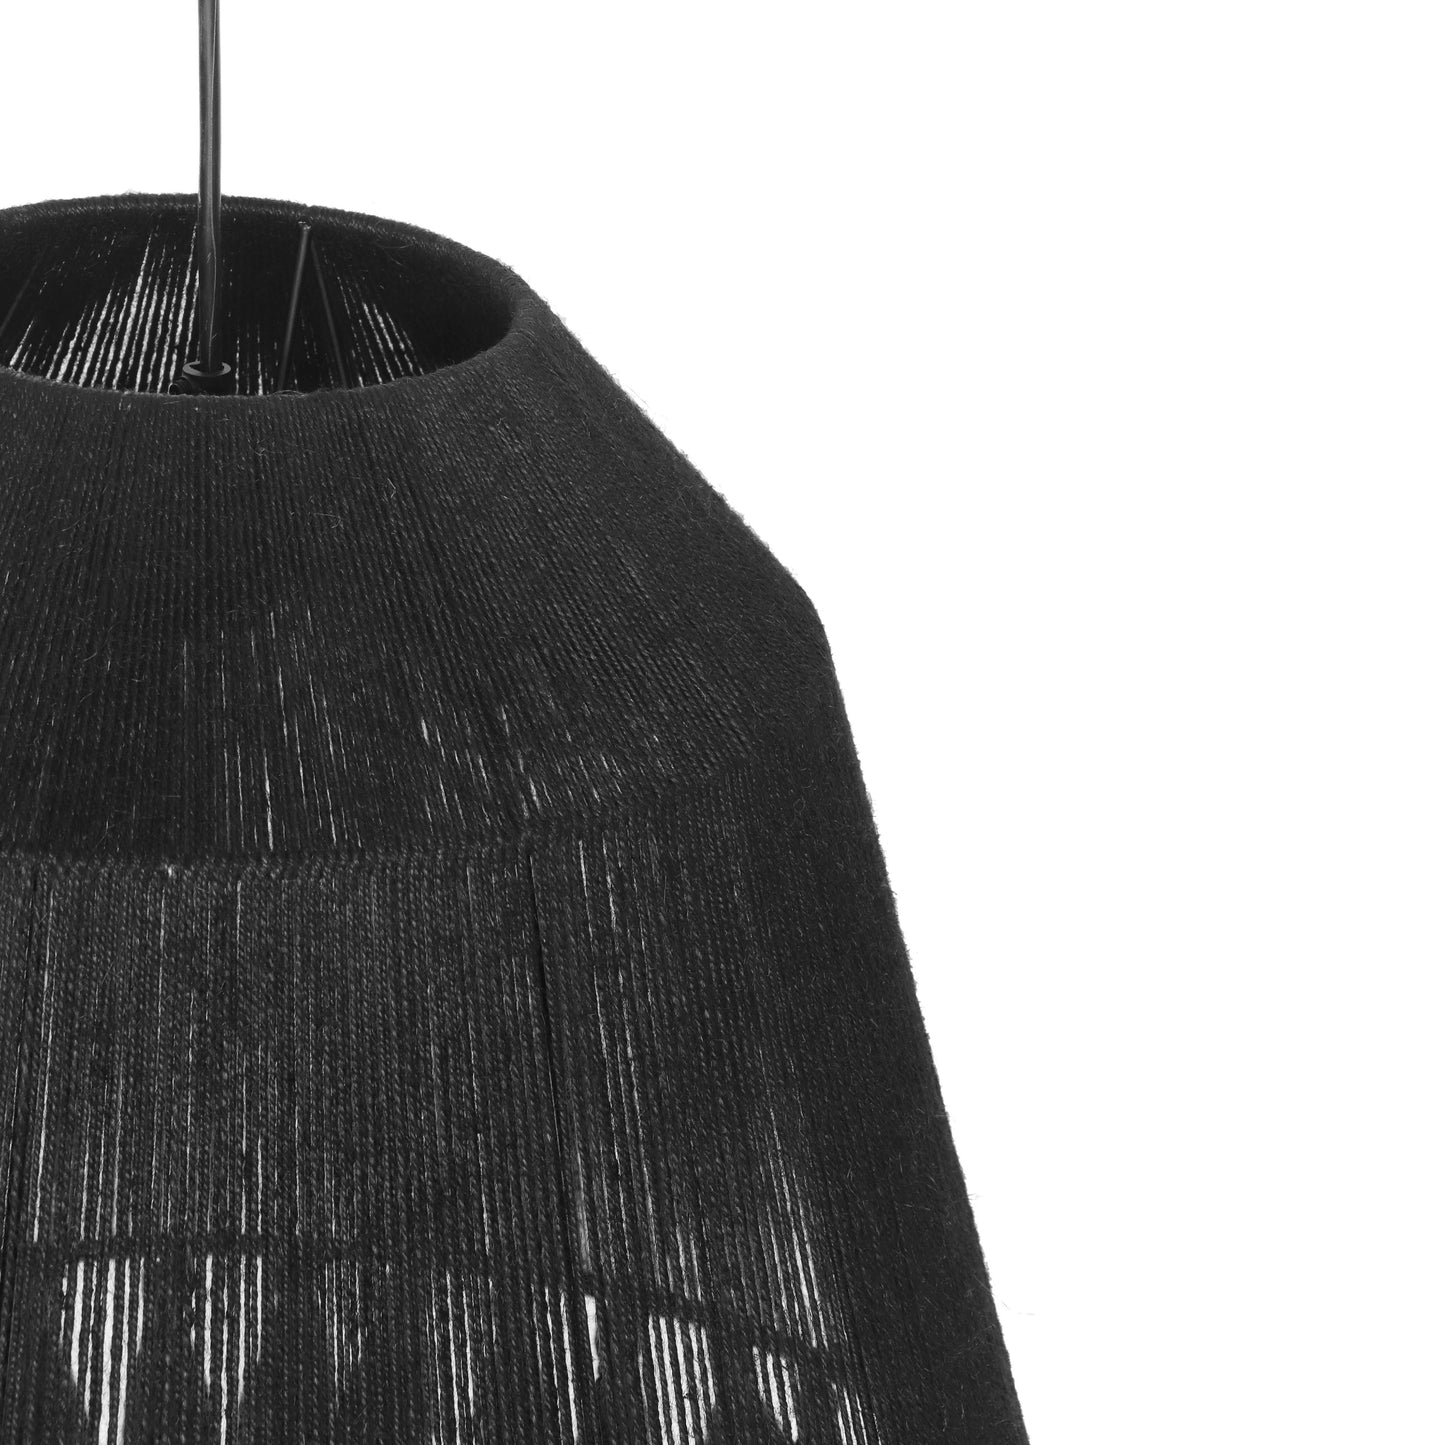 abir black jute large pendant lamp